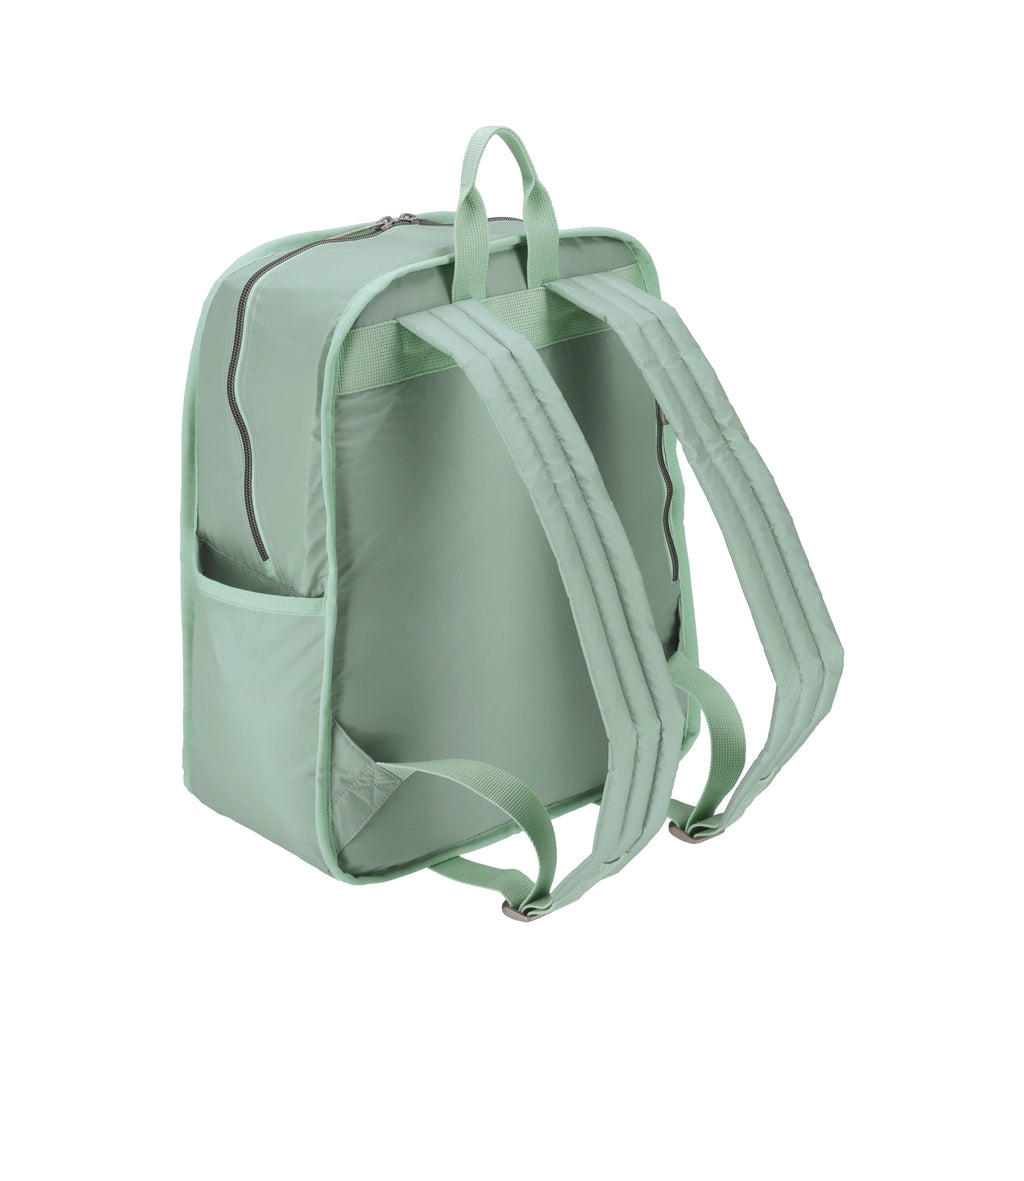 Functional Backpack - 23519999197232